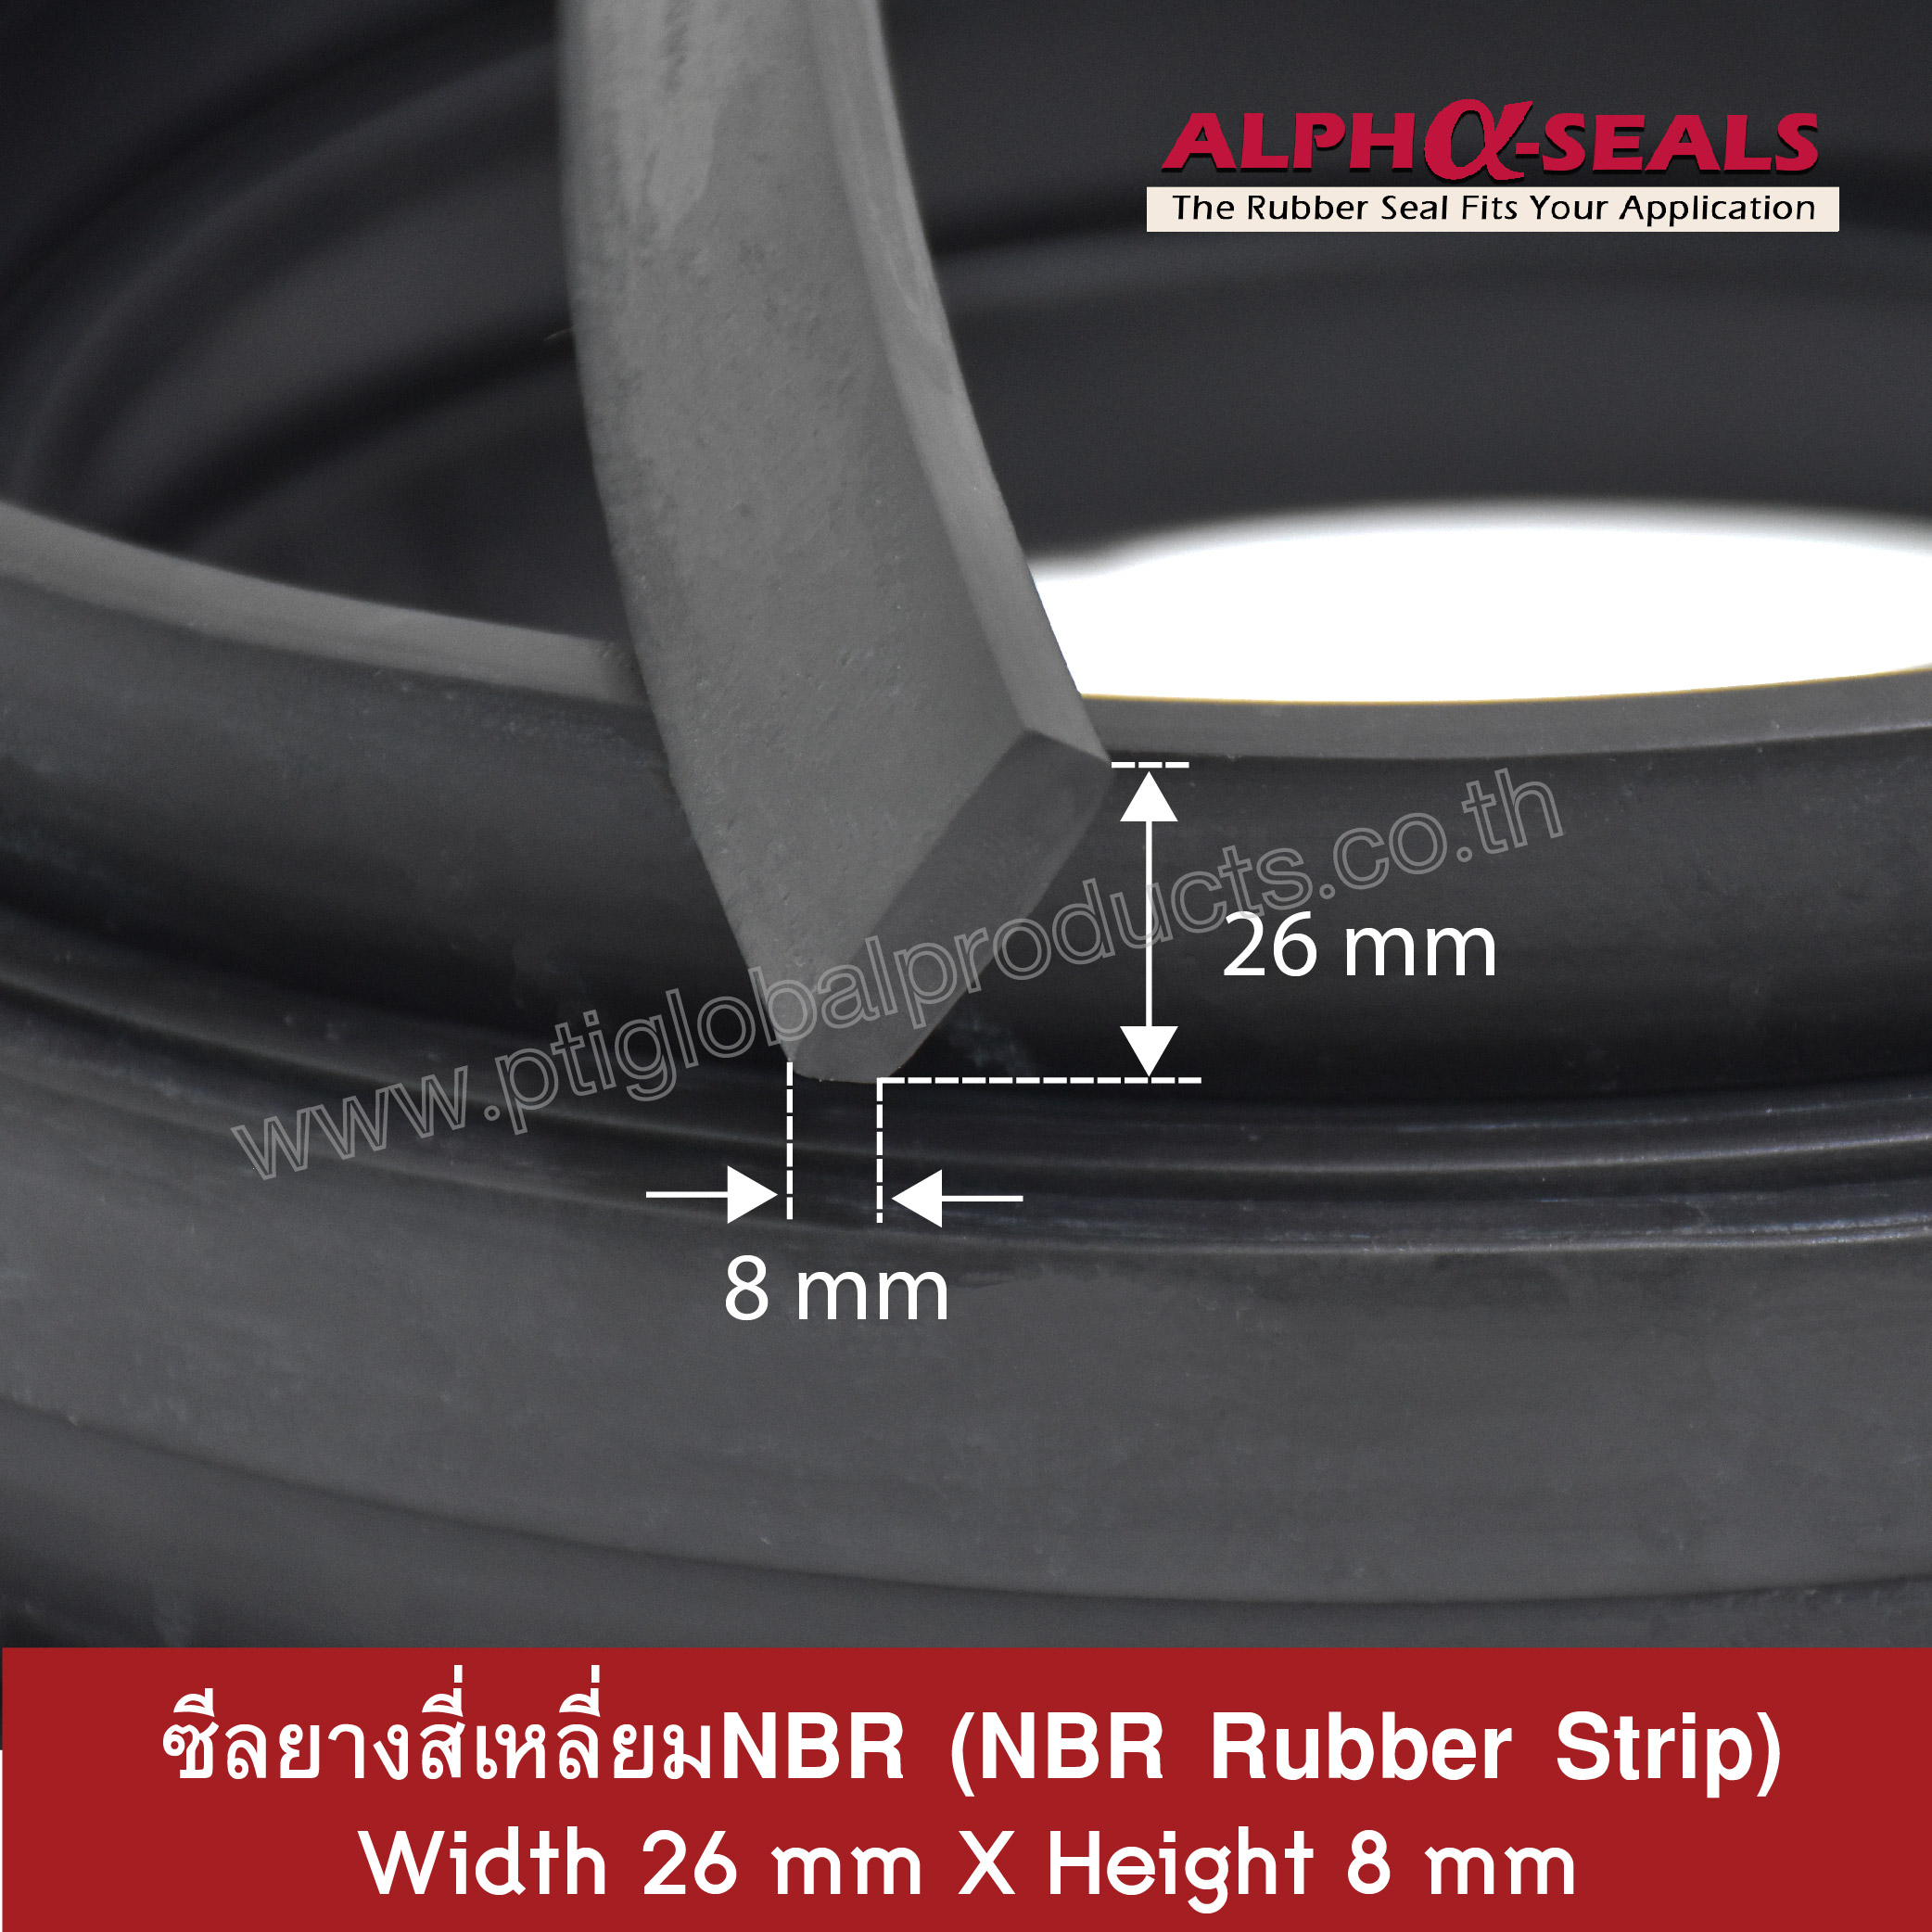  NBR Rubber Strip 8x26 mm